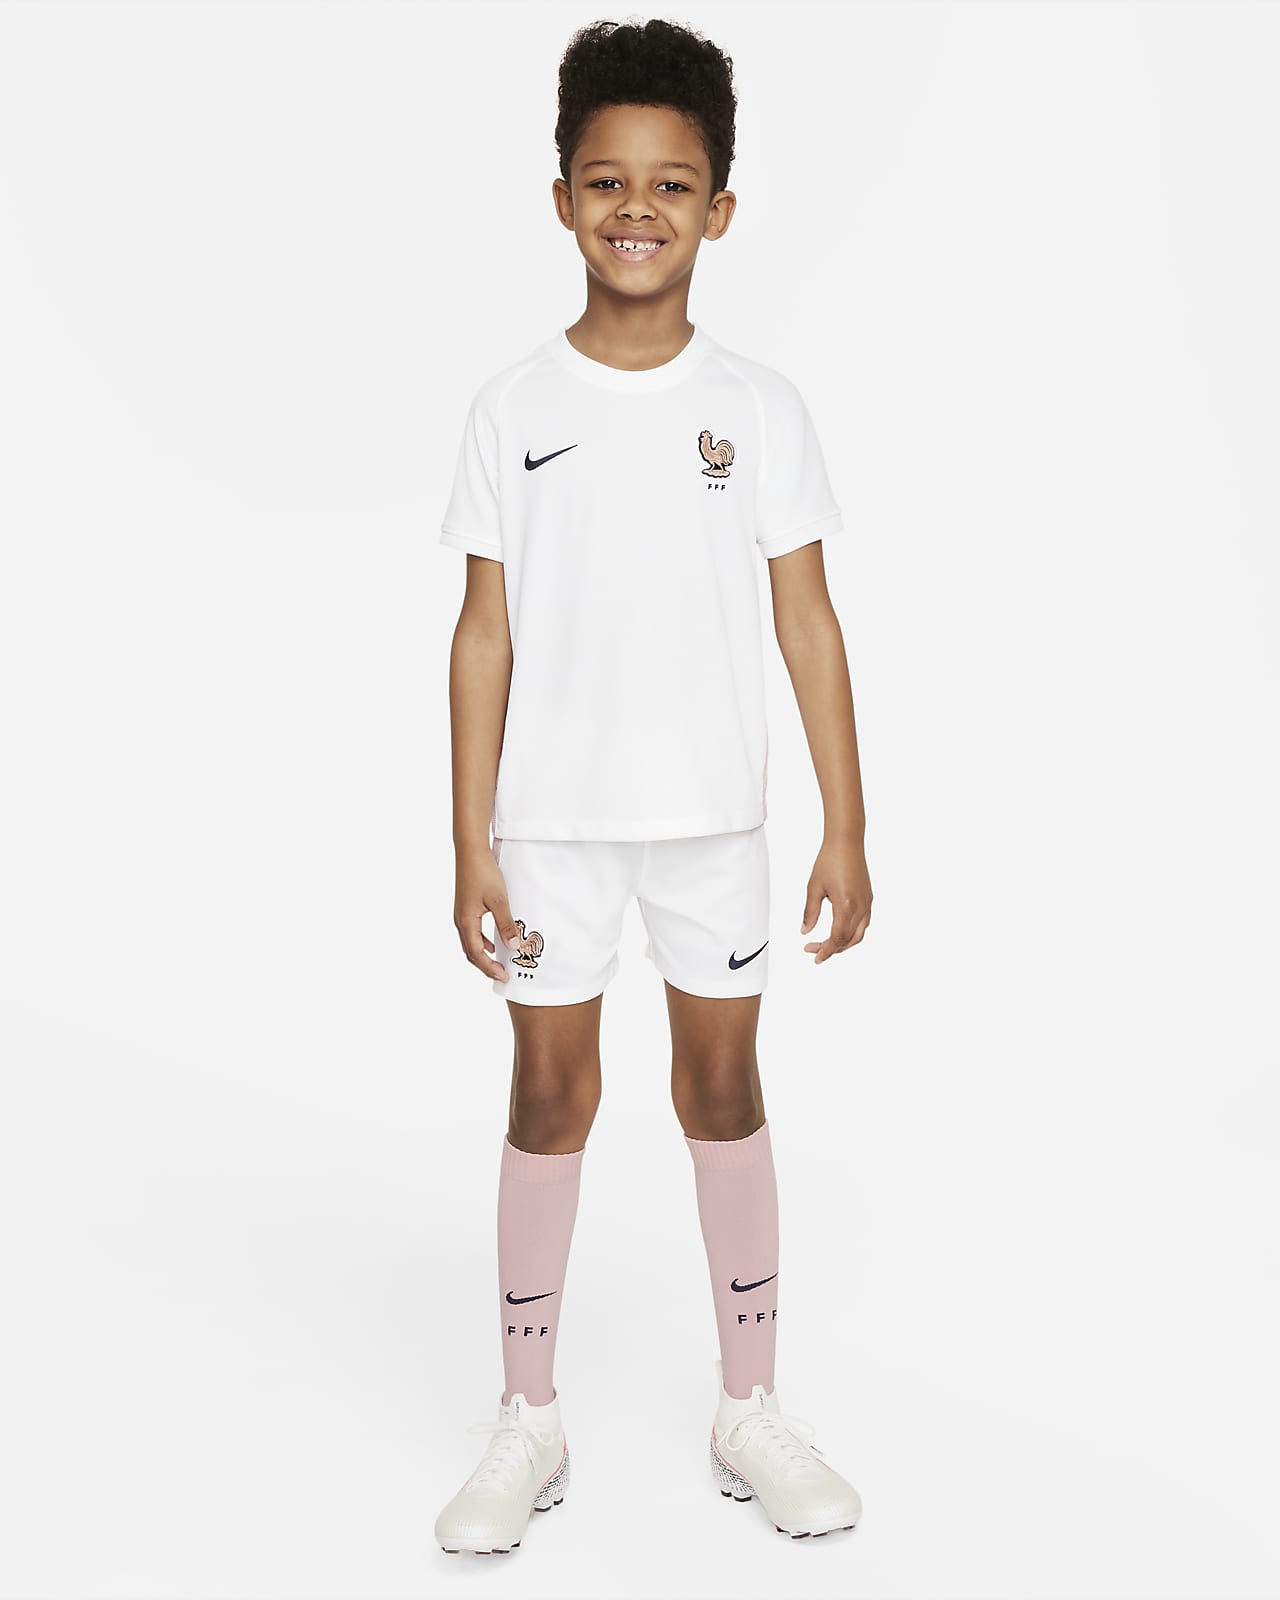 FFF 2022 Away Younger Kids' Nike Football Kit